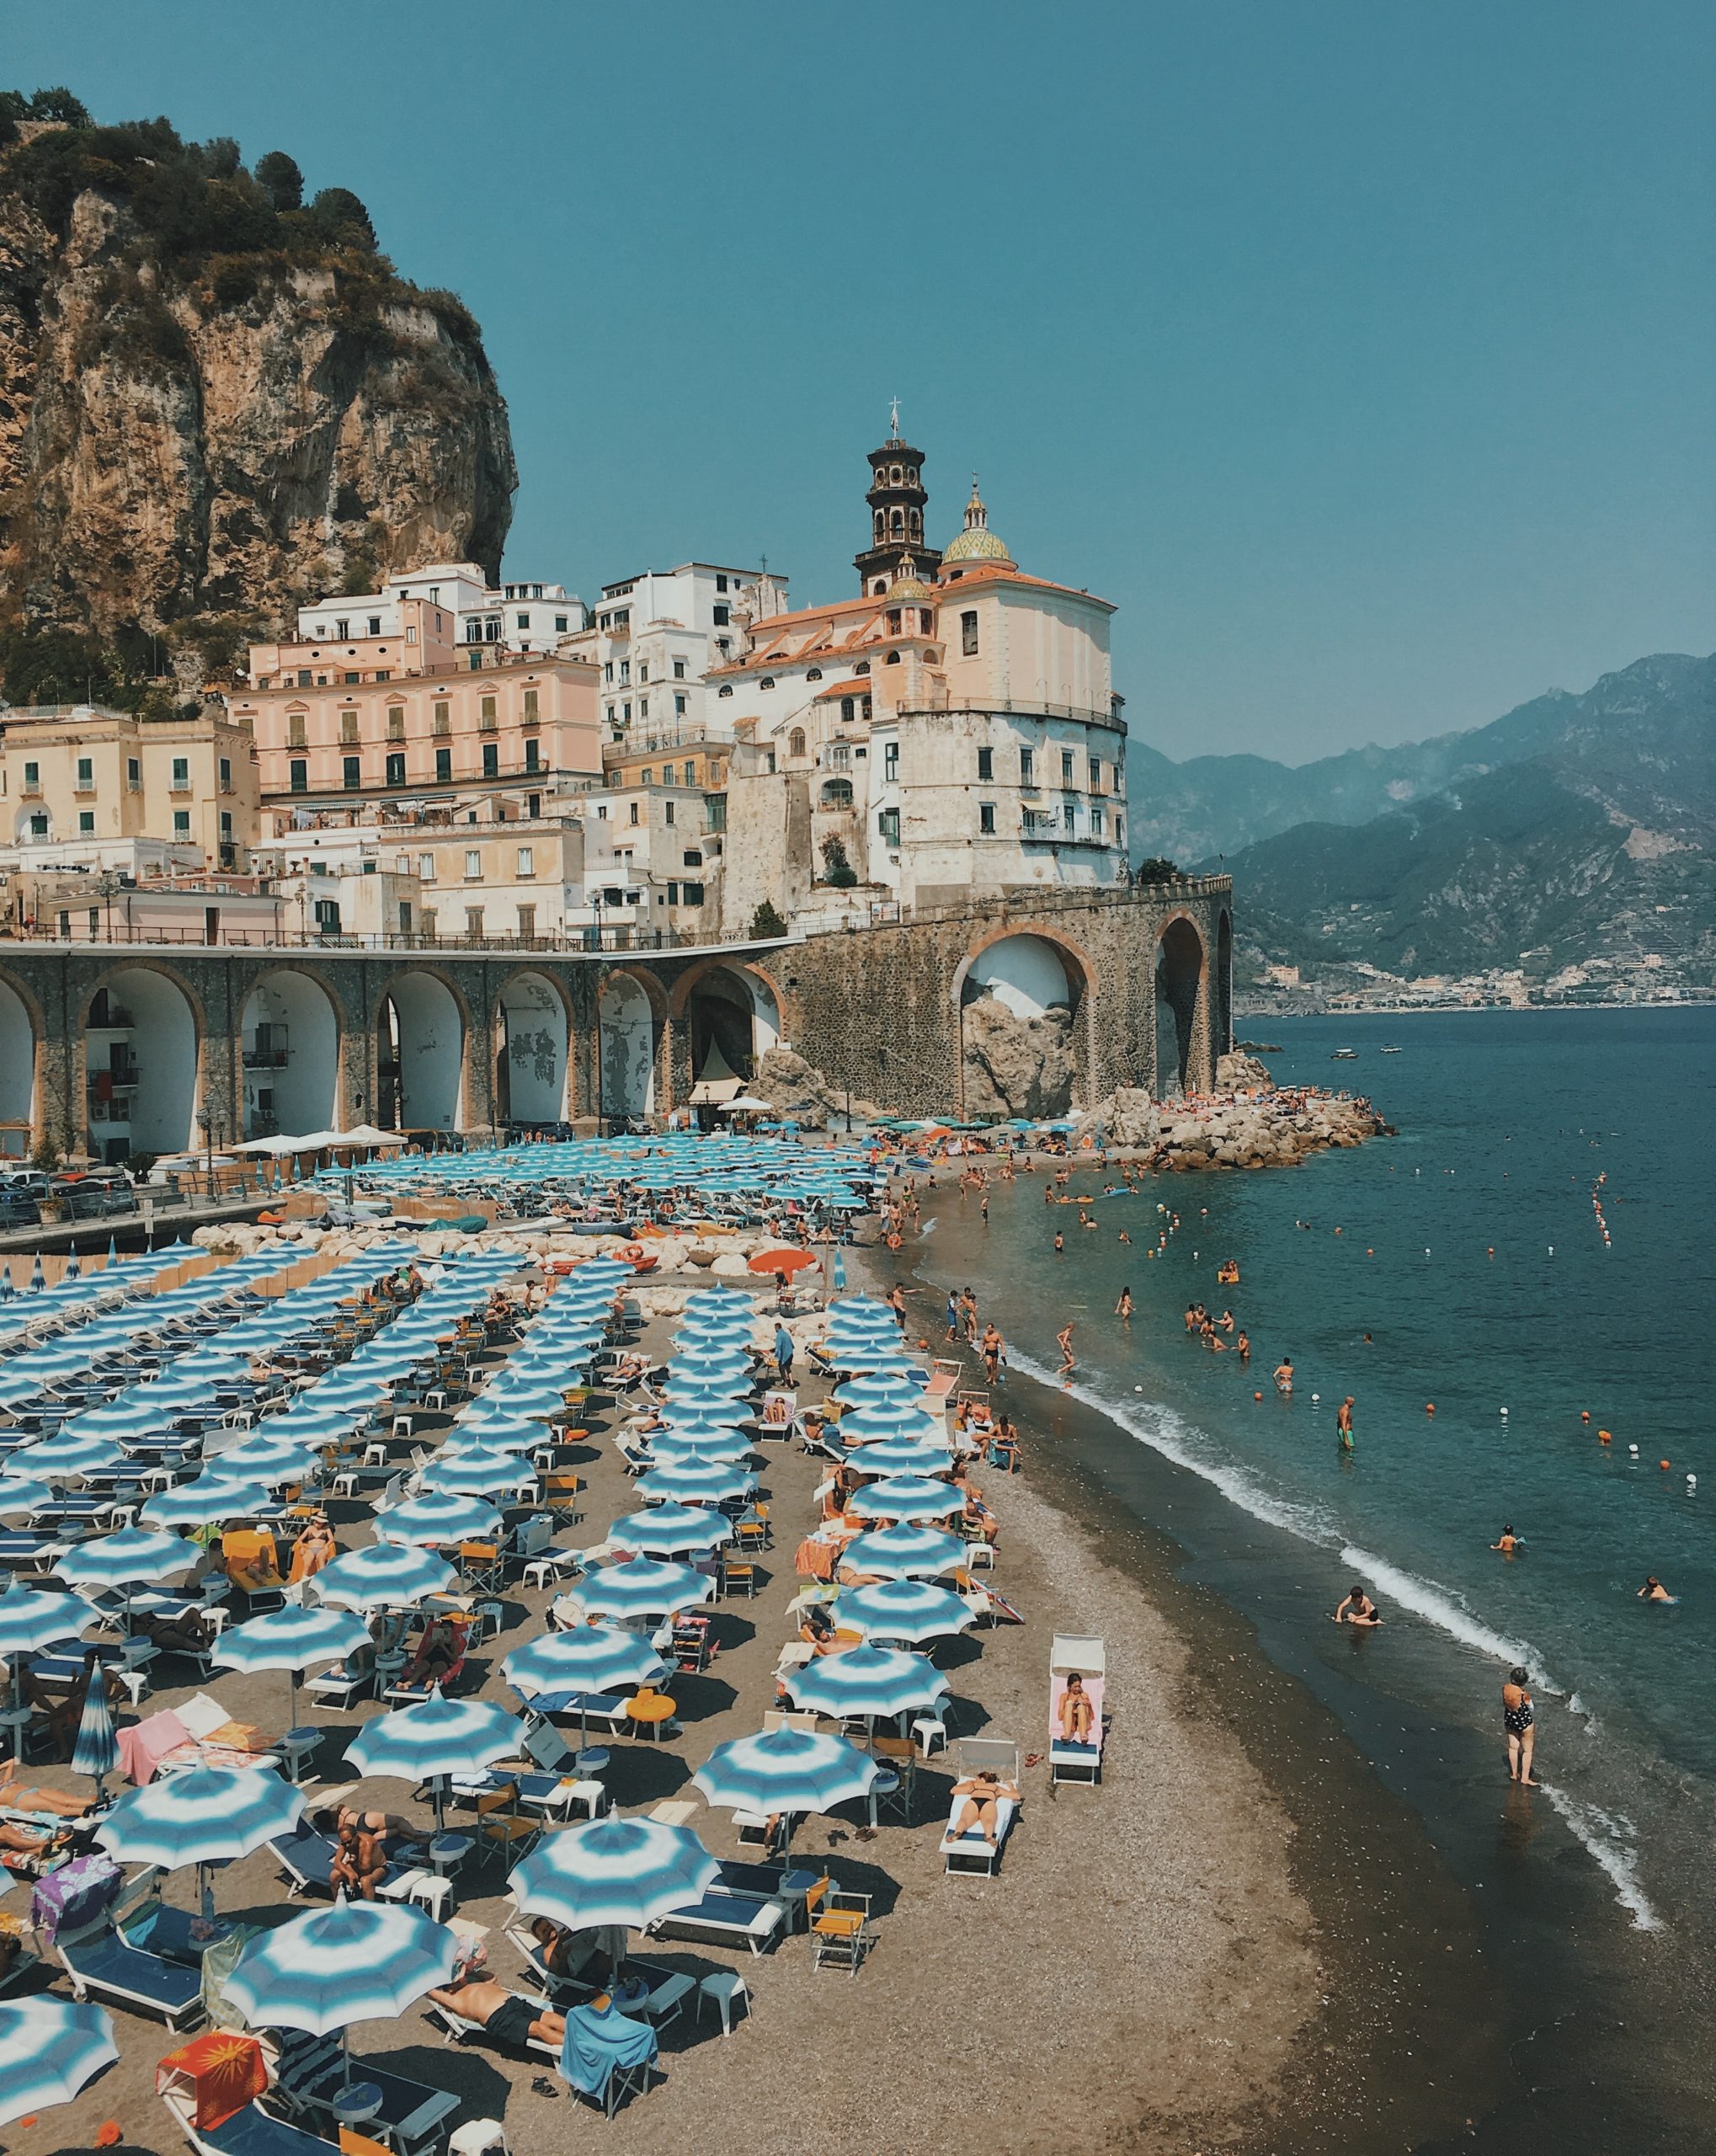 BLue umbrellas line the beach in Amalfi on the Amalfi Coast